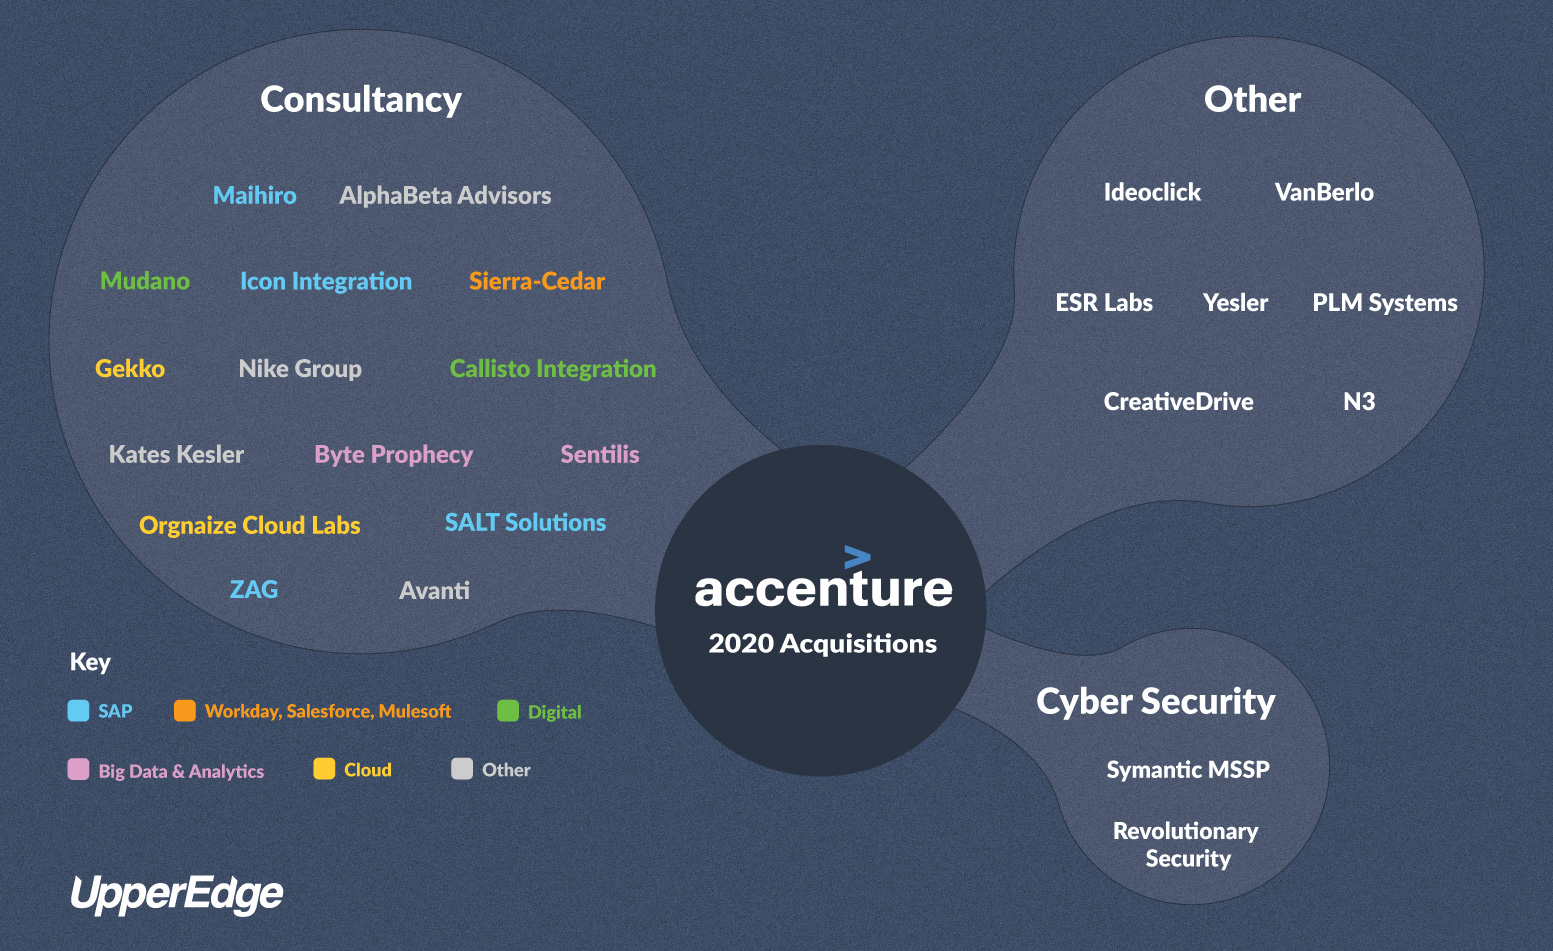 Accenture 2020 Acquisitions